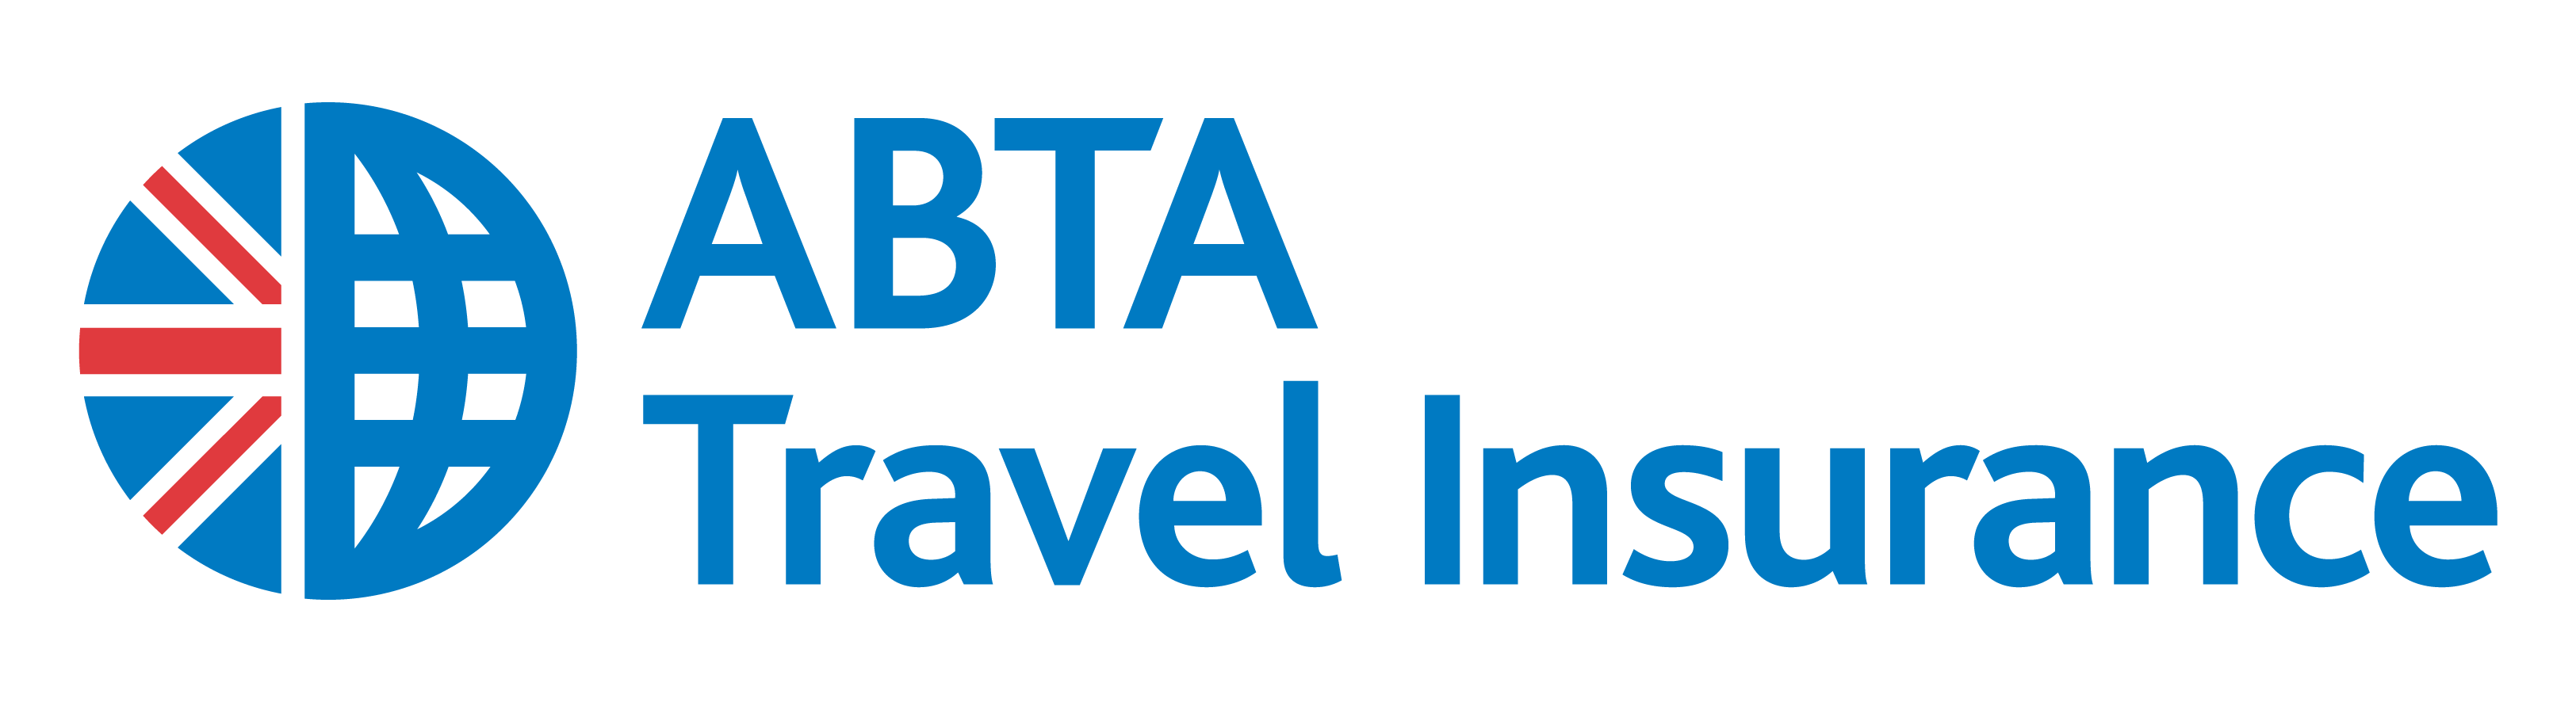 abta travel insurance discount code